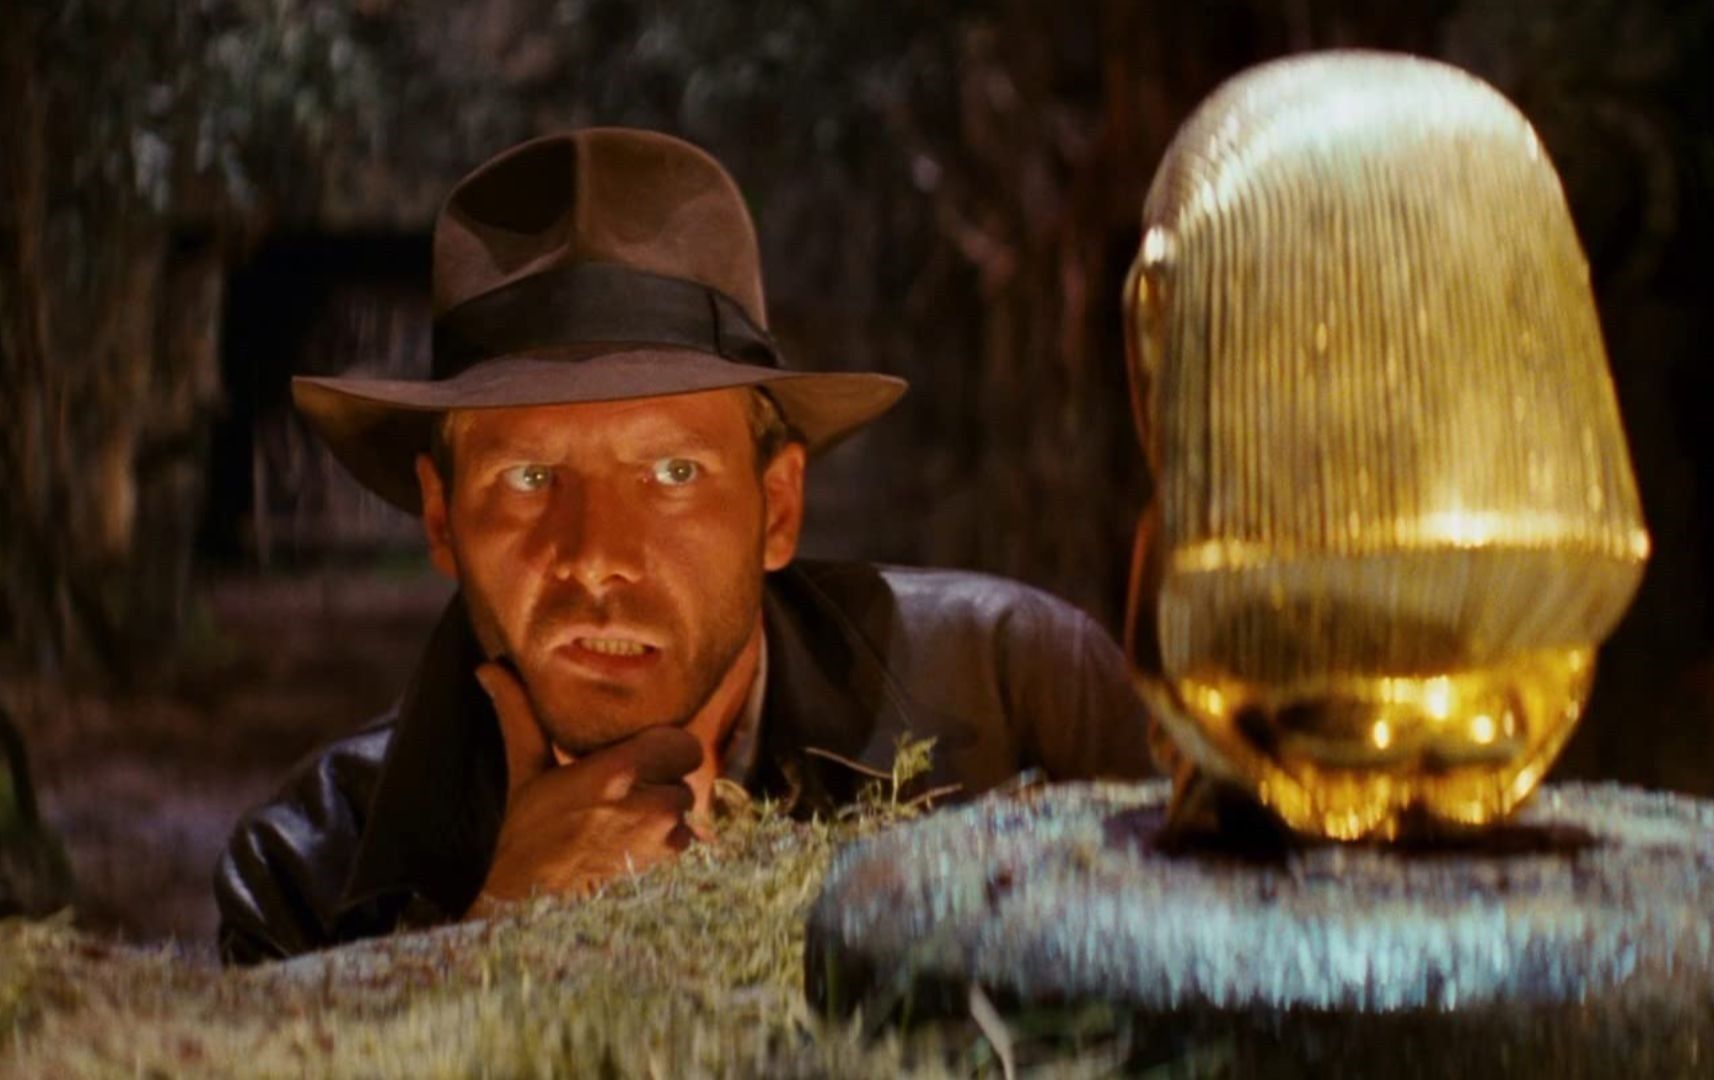 'Indiana Jones' collection to stream on Disney+ ahead of new movie